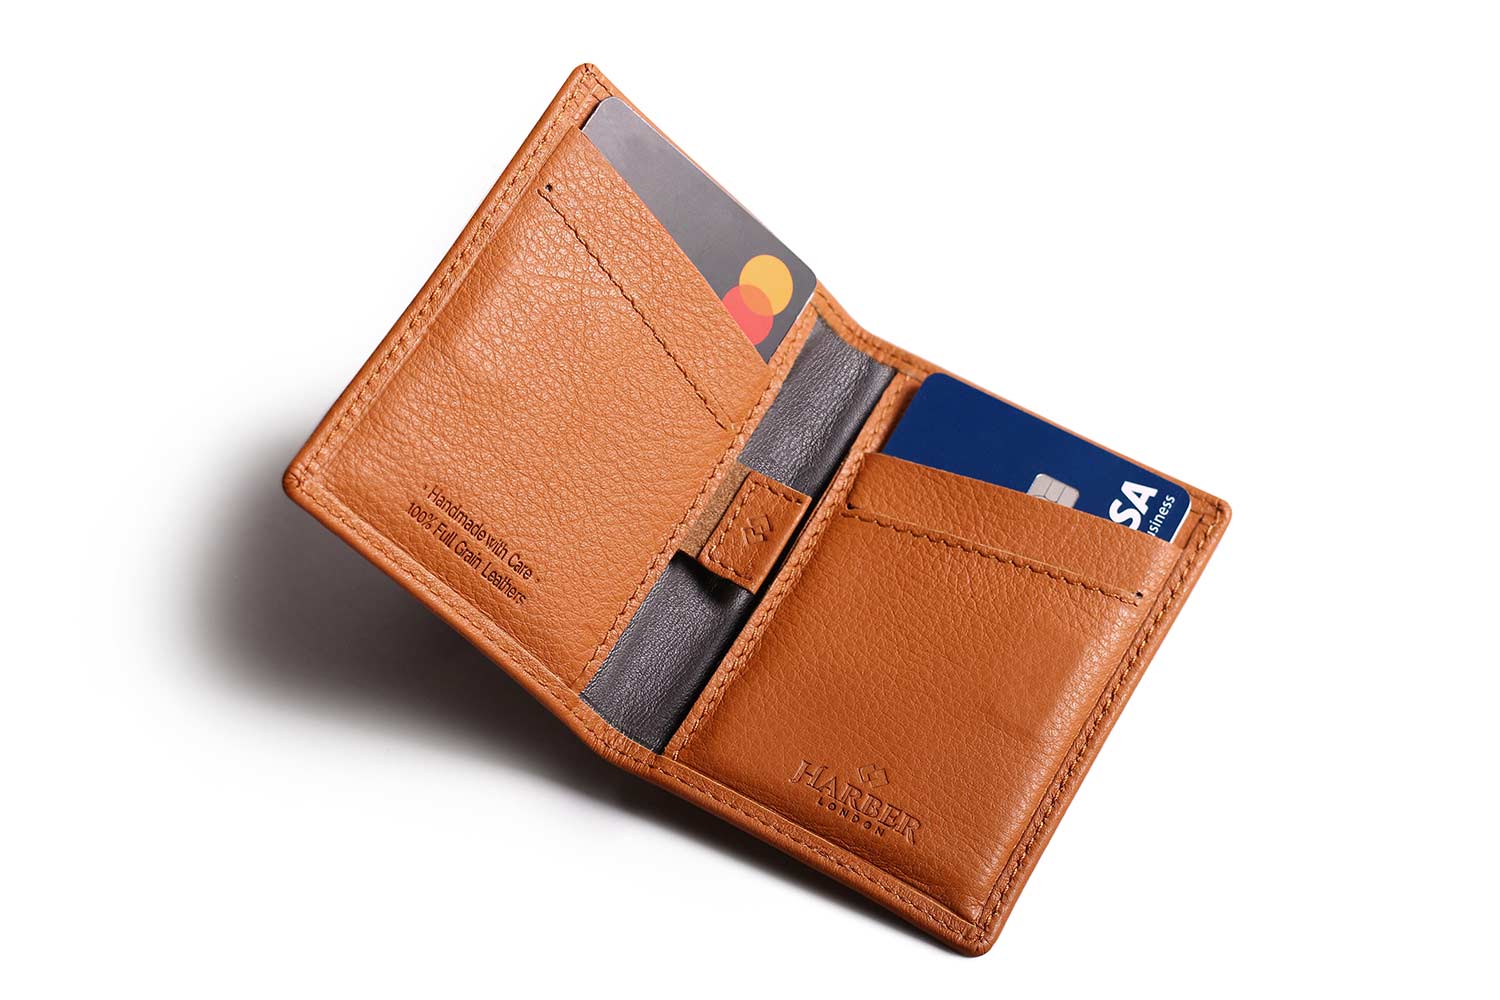 Card Wallet RFID Protected | Harber London